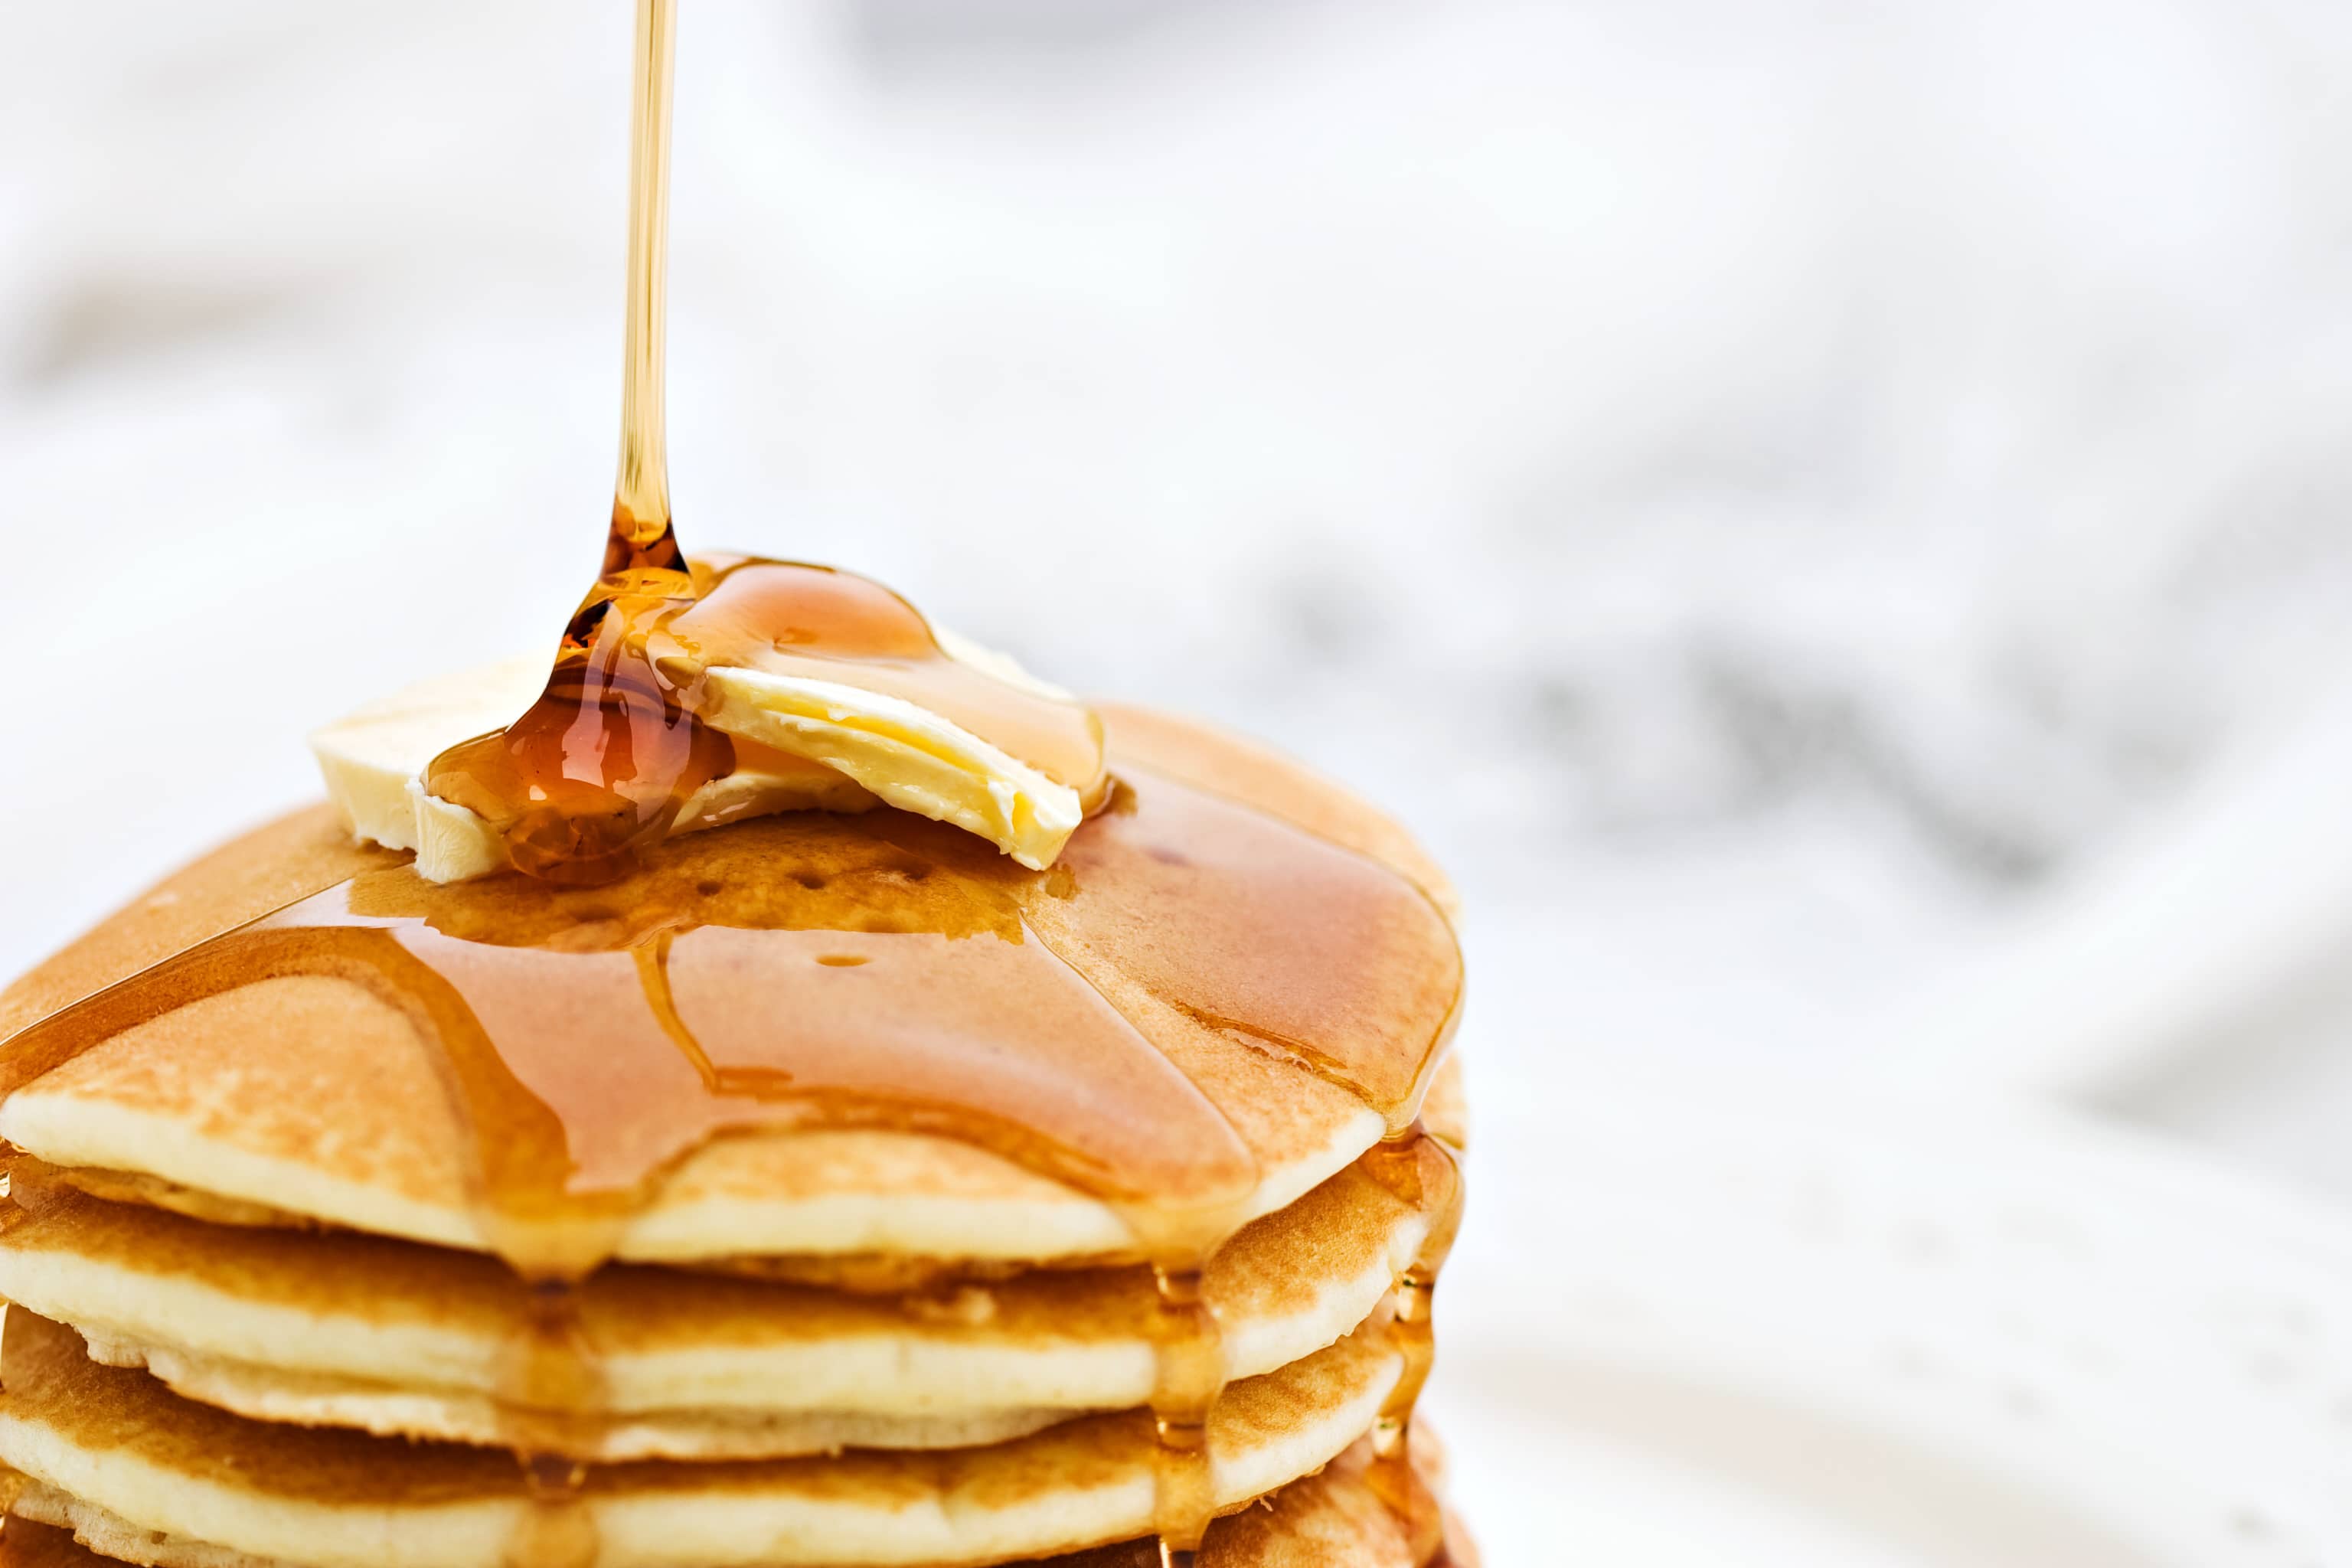 Maple syrup pouring onto pancakes. - Calorie Control Council